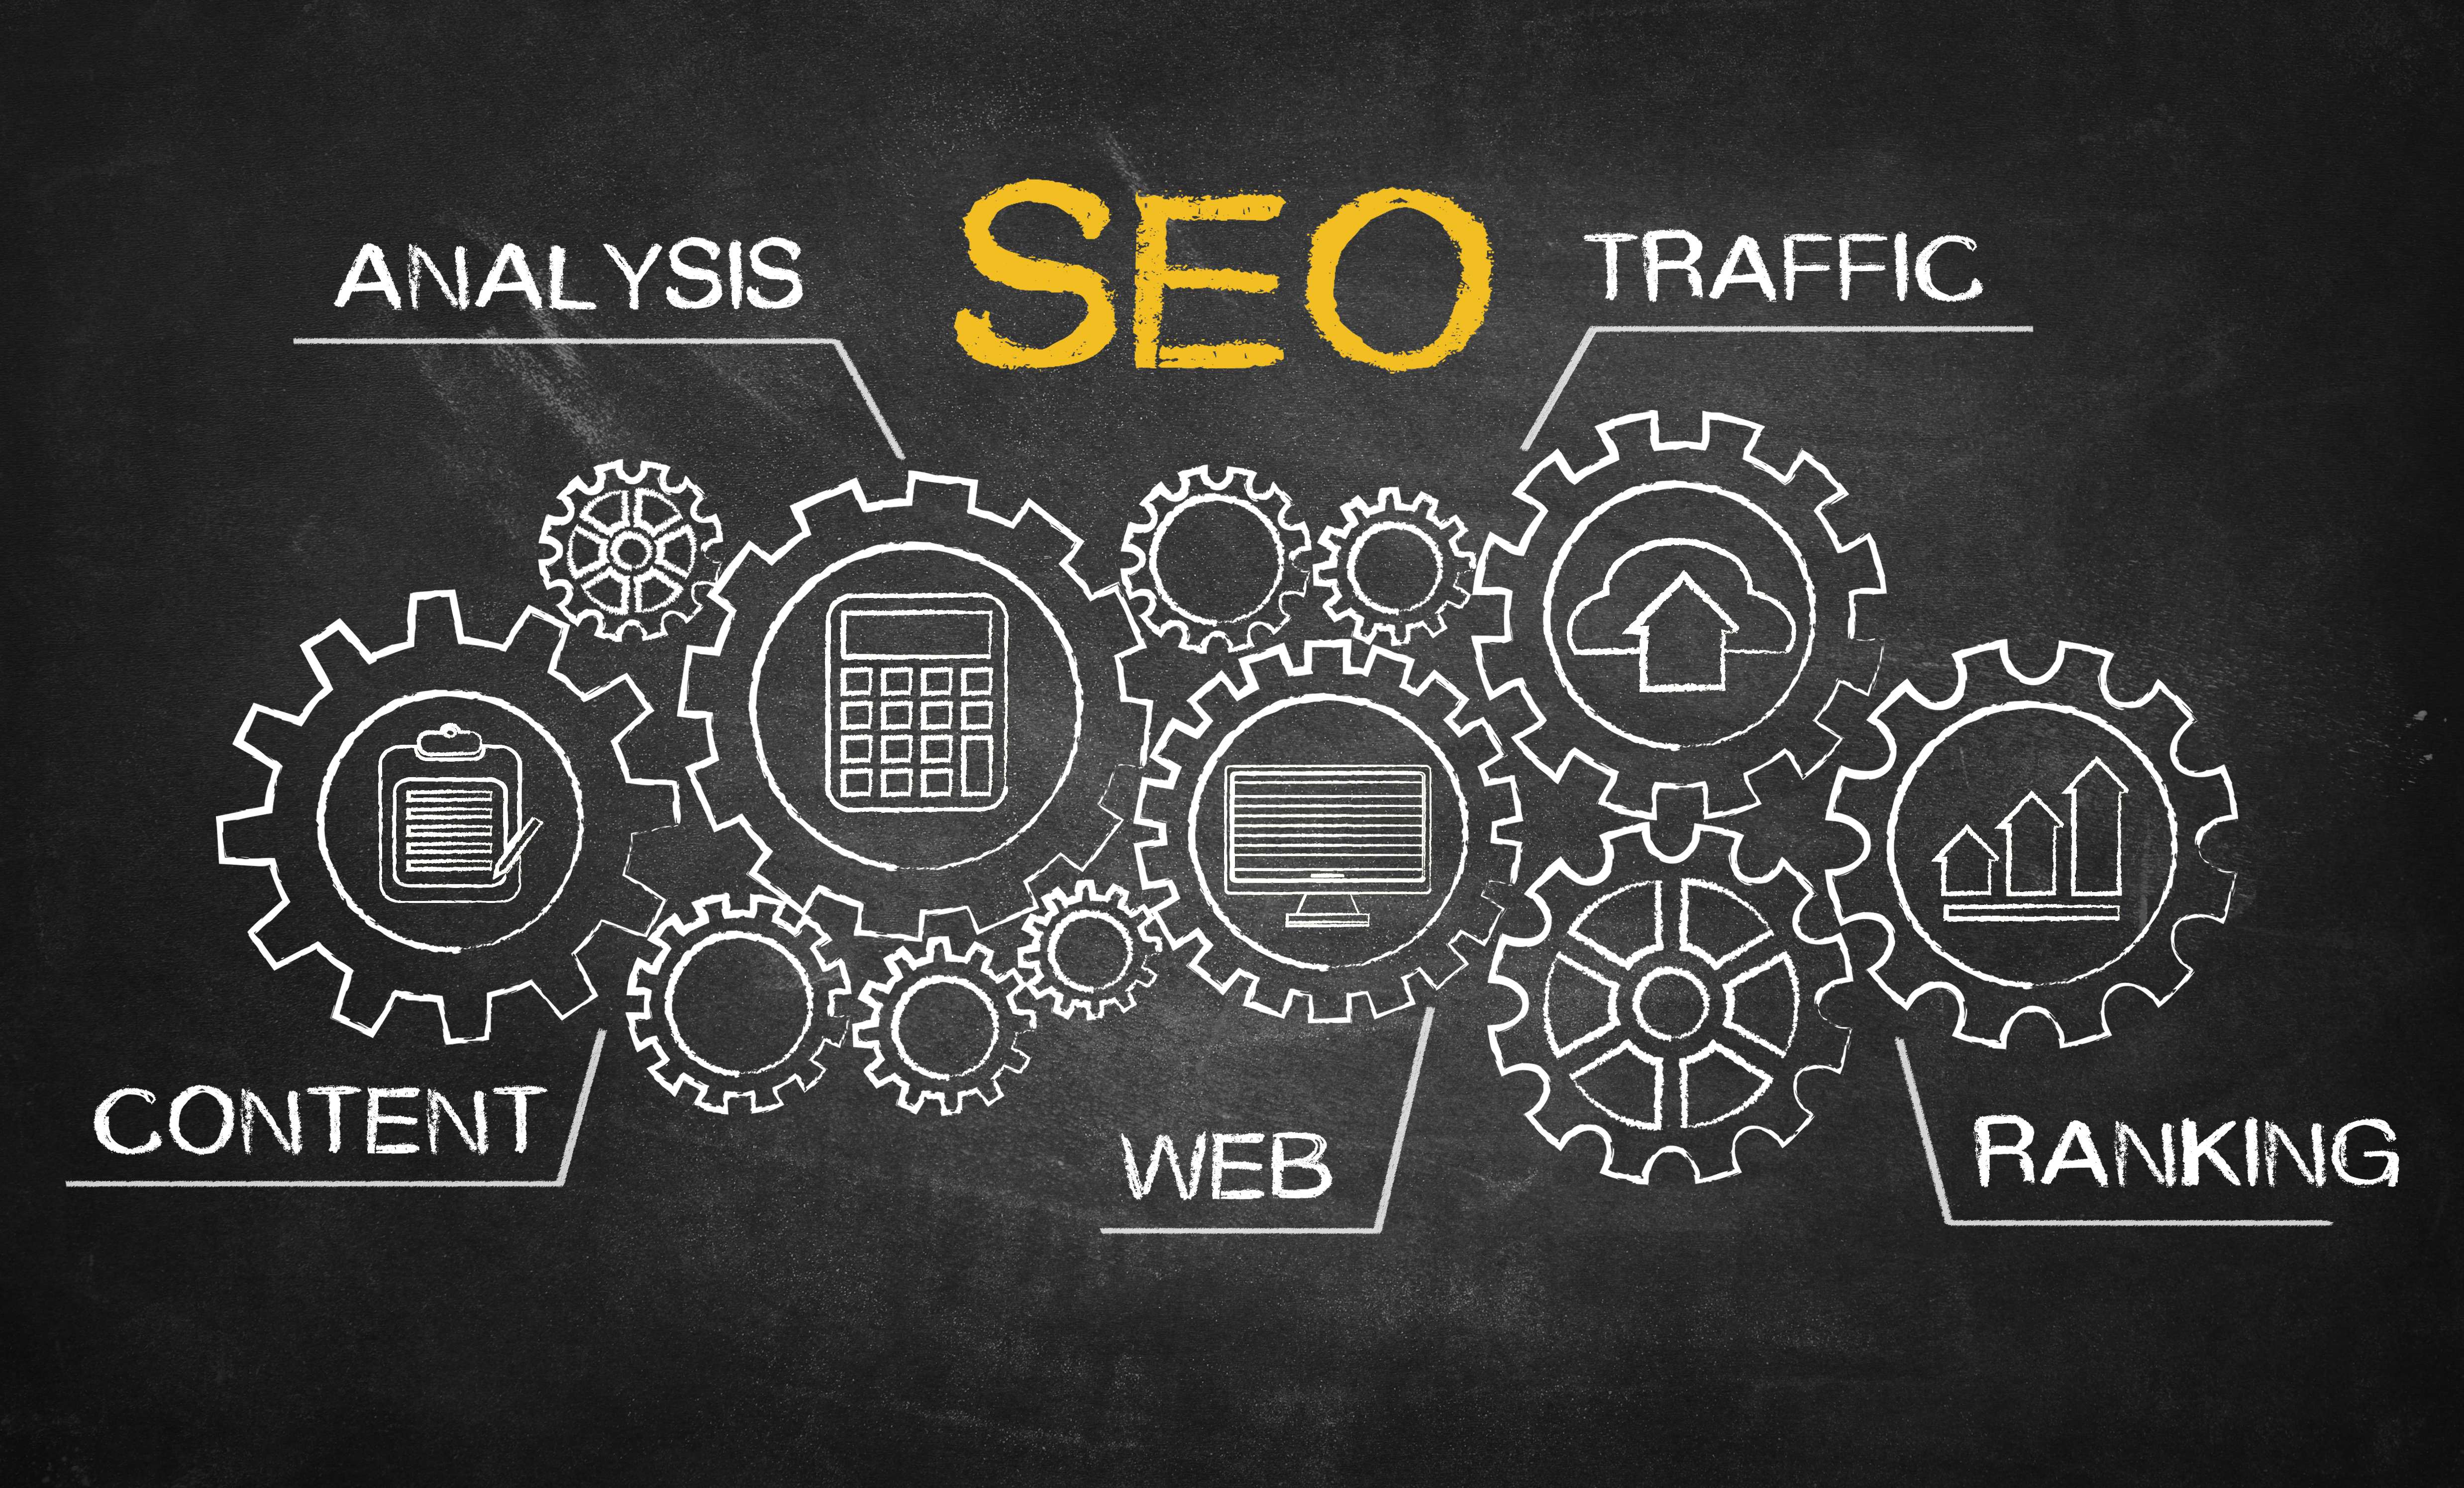 SEO search engine optimization concept